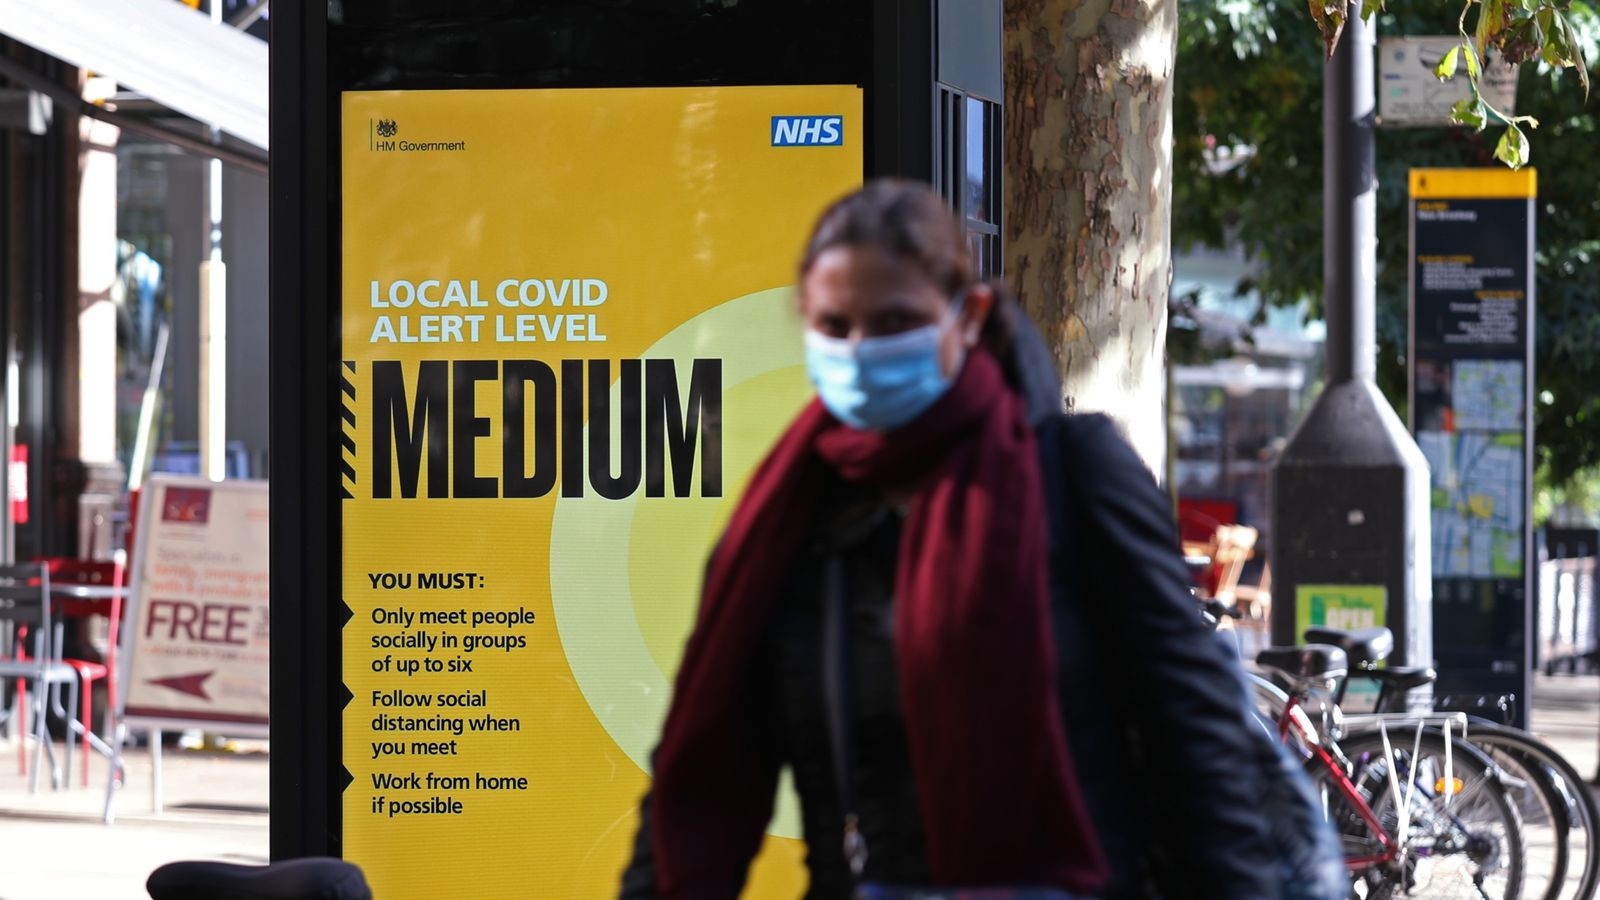 Coronavirus: New COVID-19 restrictions affect more than half of England’s population |  UK News